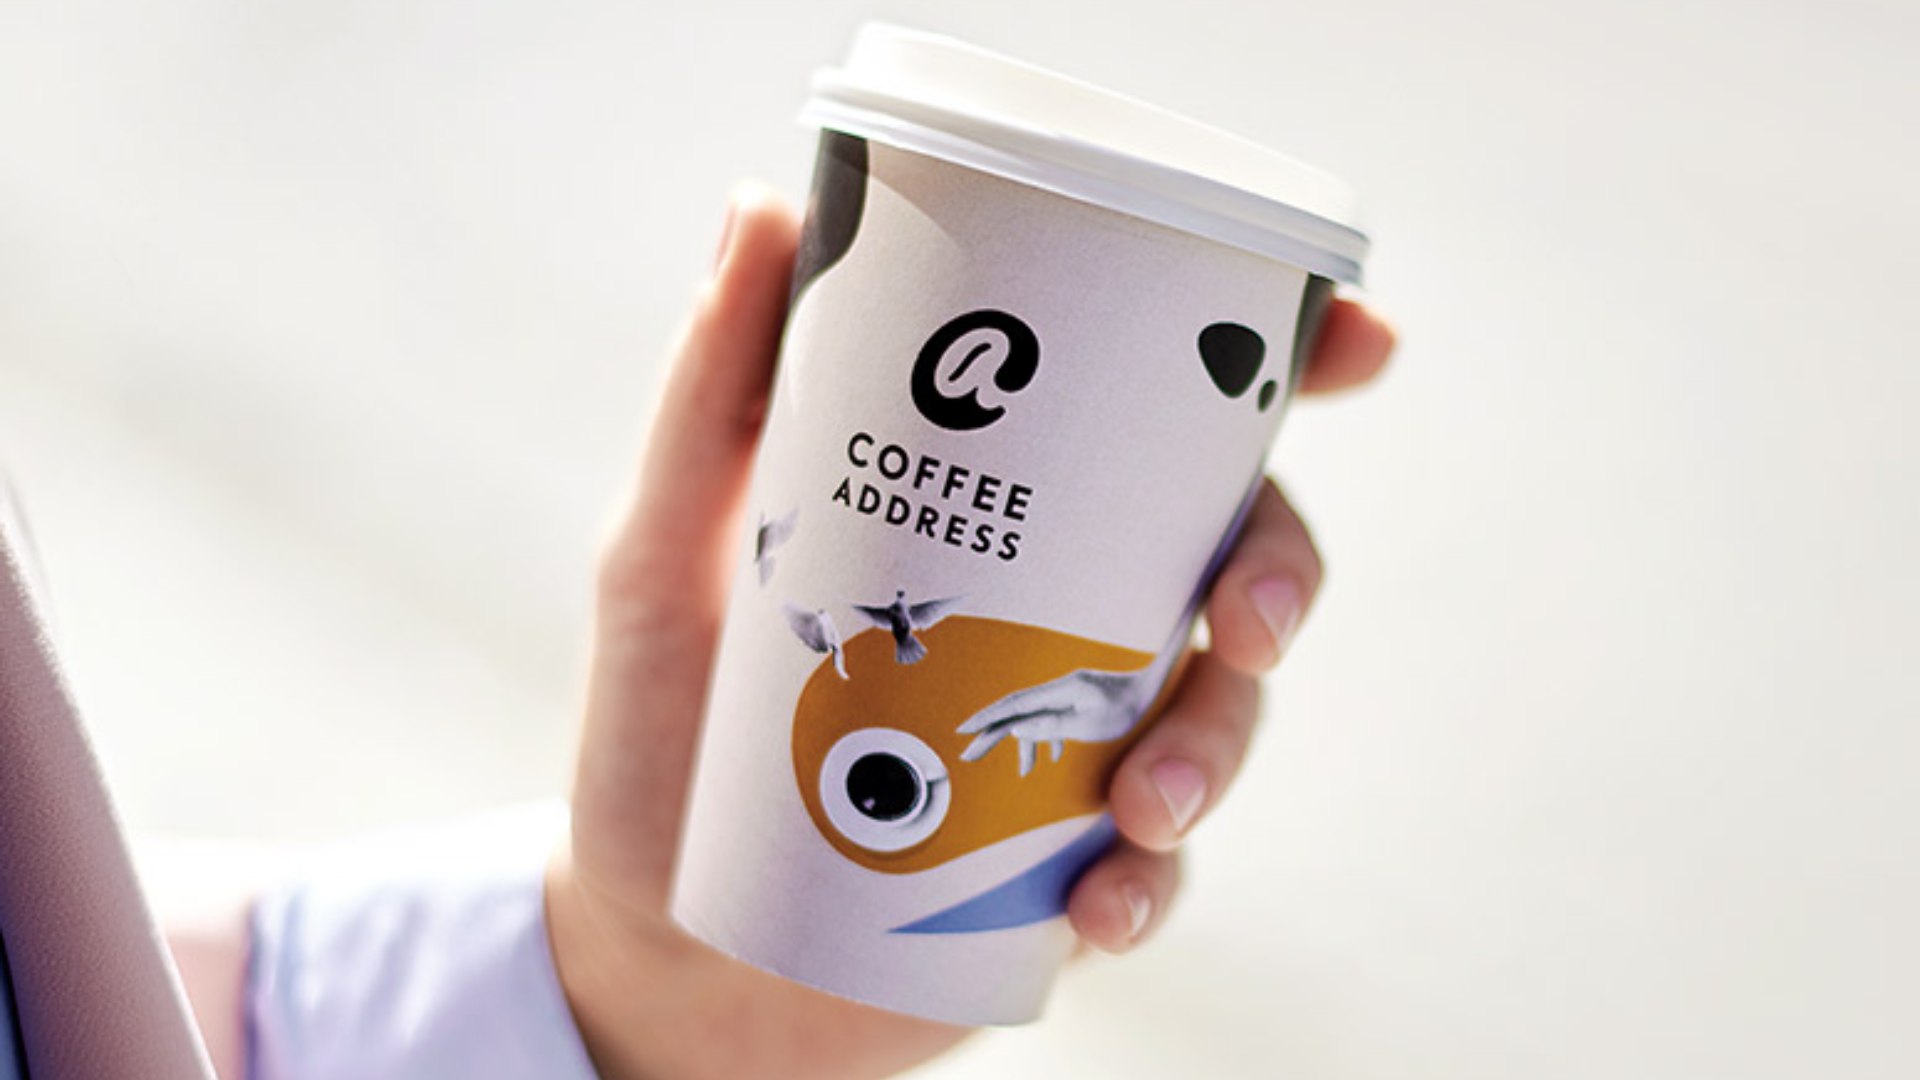 BaltCap-backed Coffee Address has acquired Latvian vending machine operator Kafe Serviss